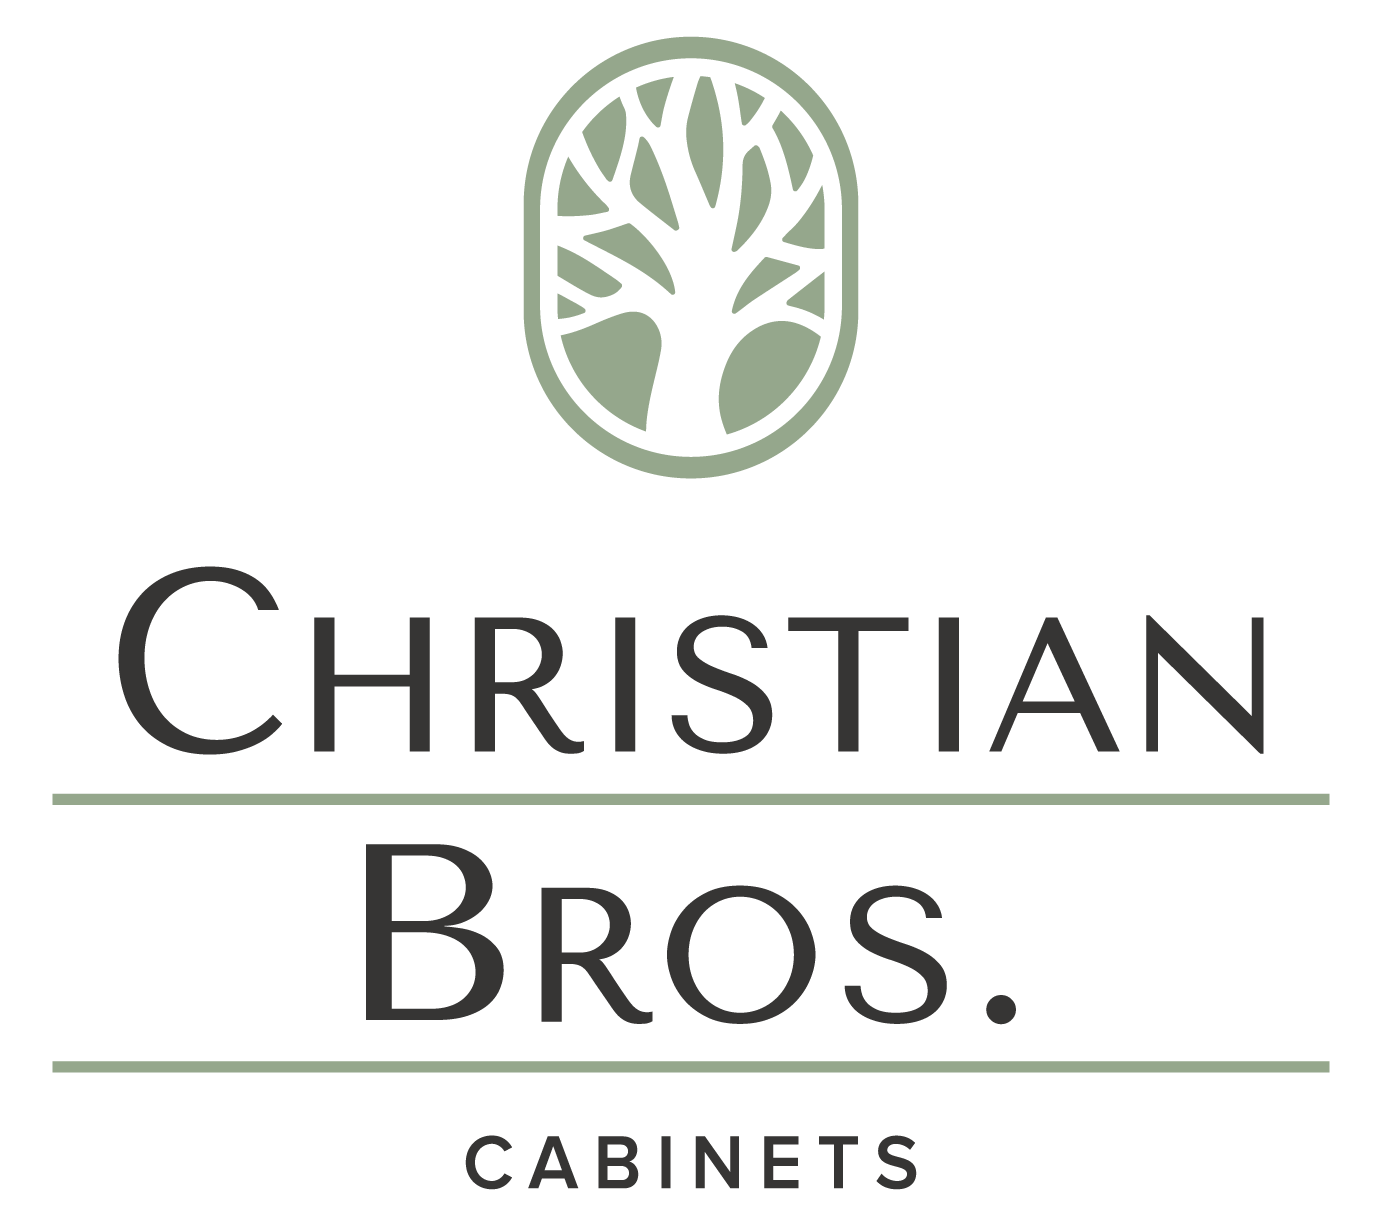 Christian bros cabinets logo.